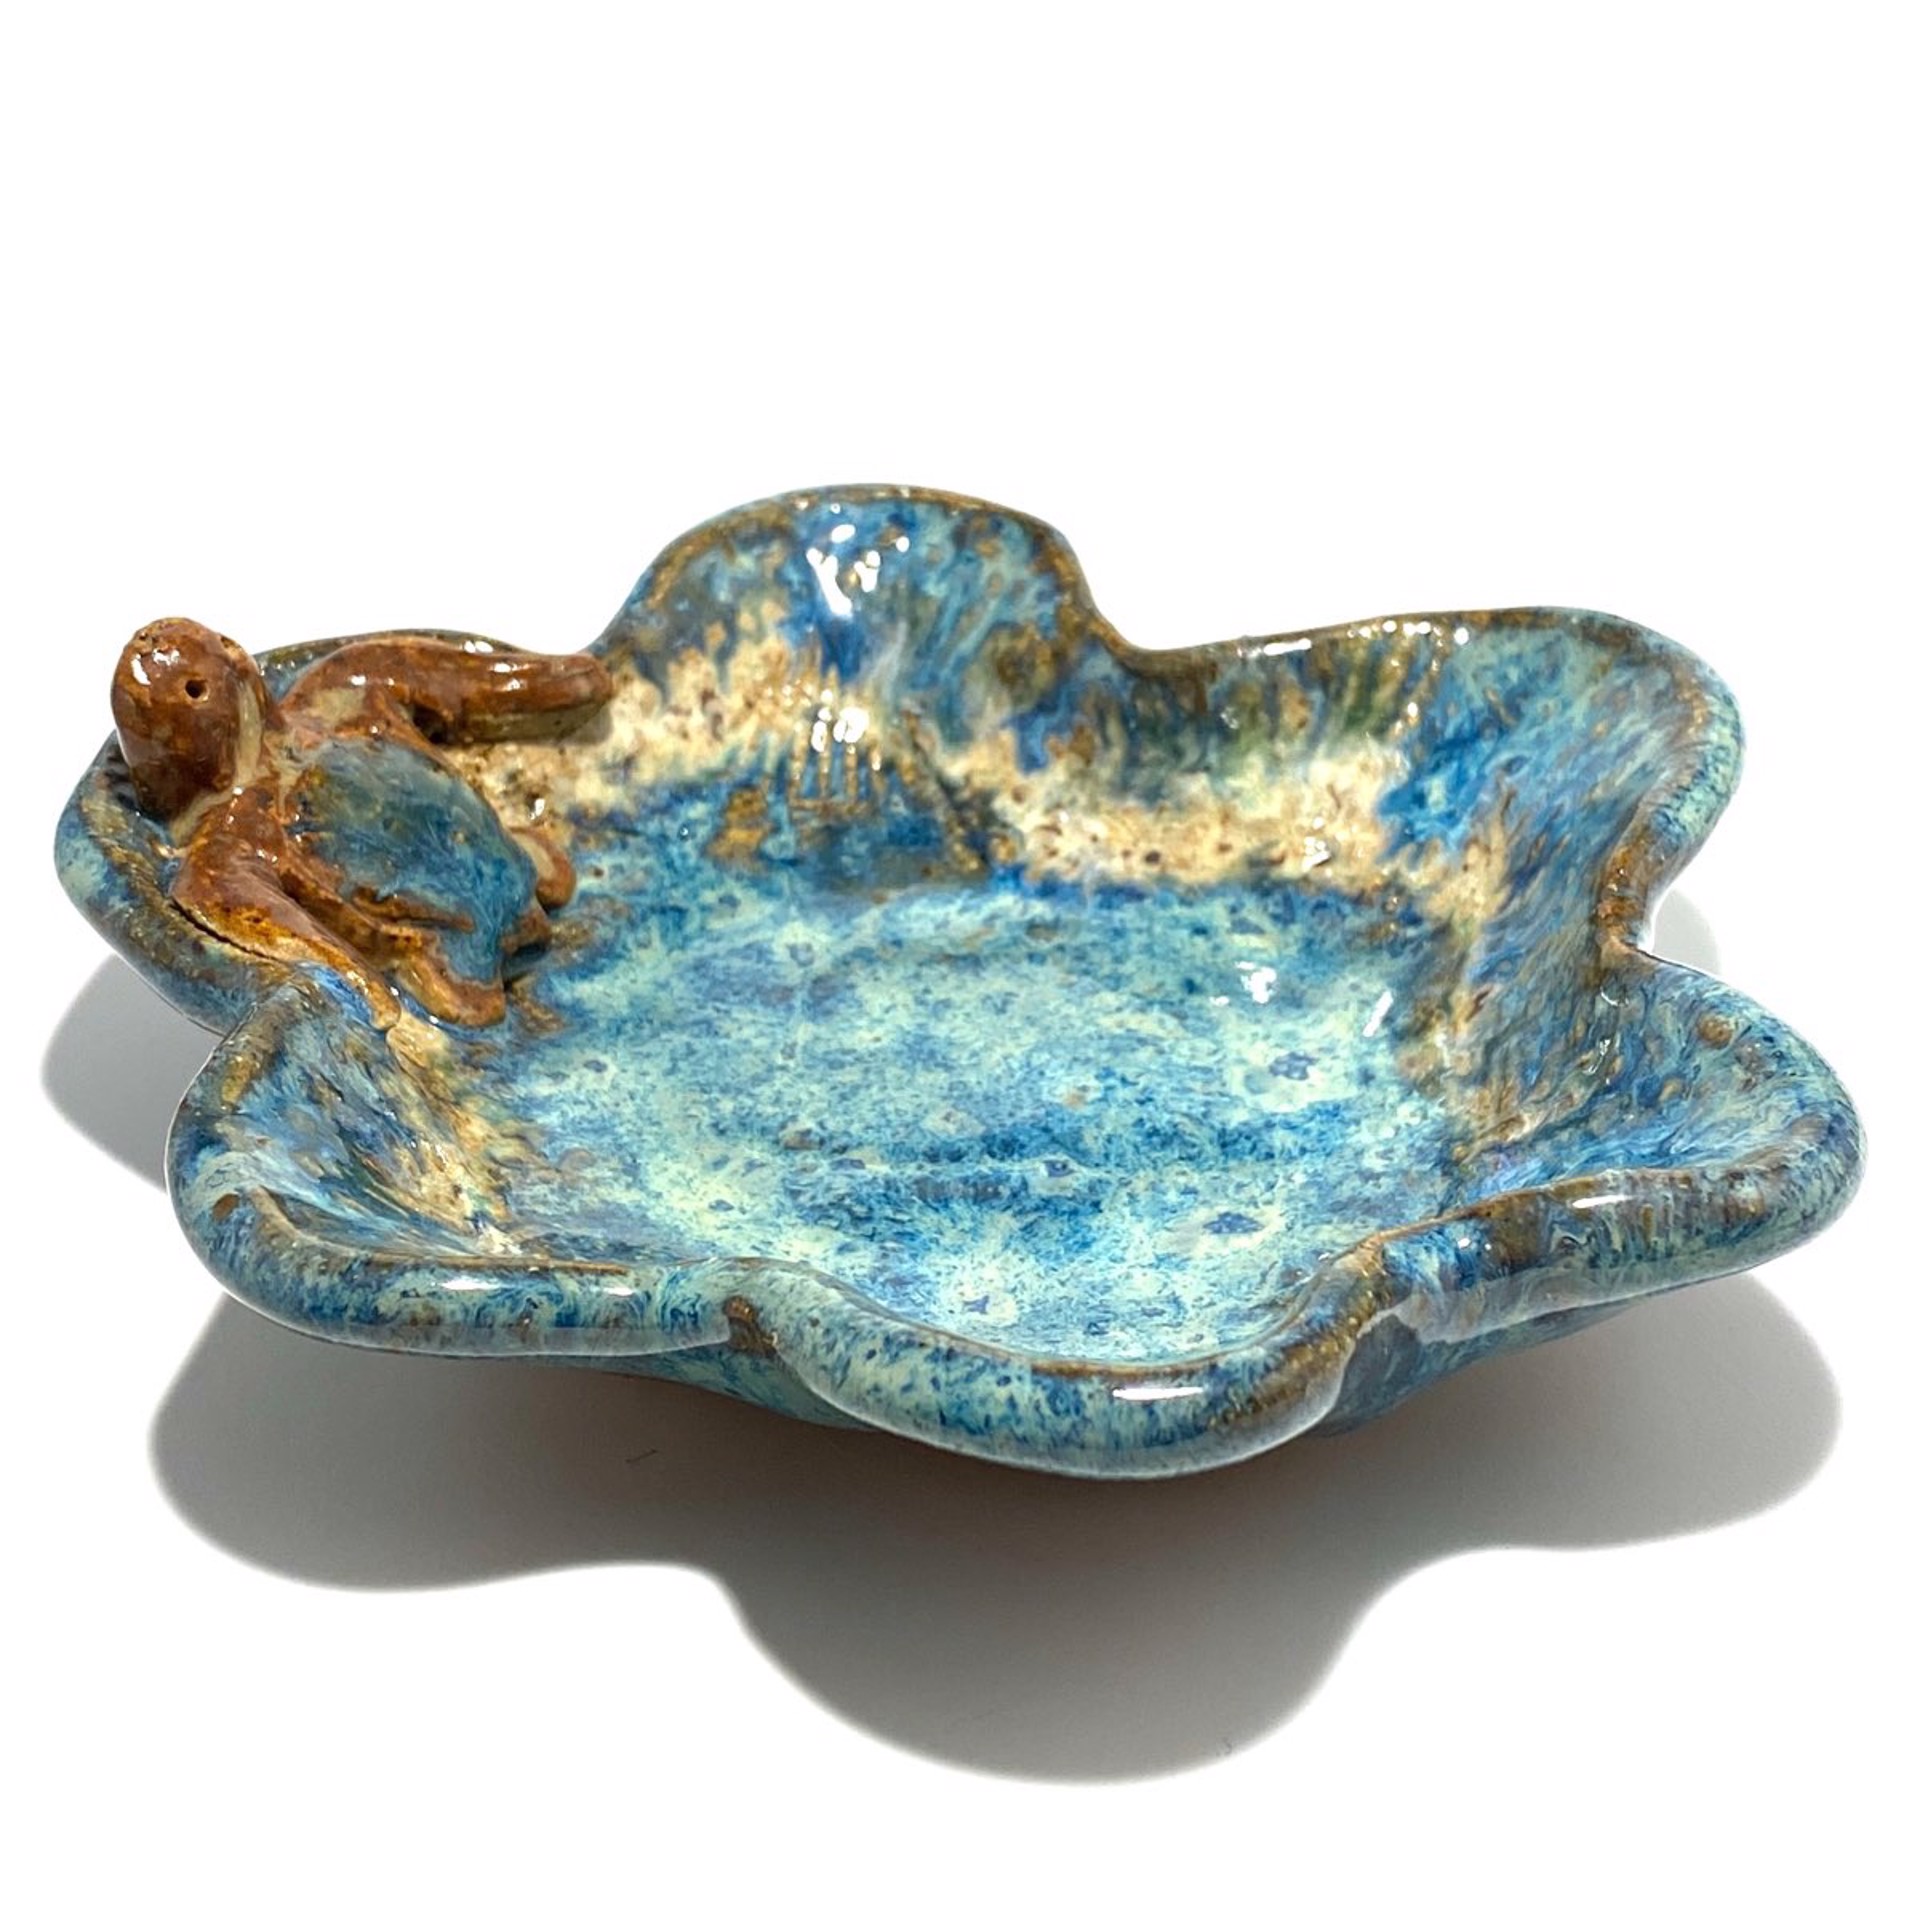 Small Pool Dish with Turtle (Blue Glaze) LG23-1126 by Jim & Steffi Logan